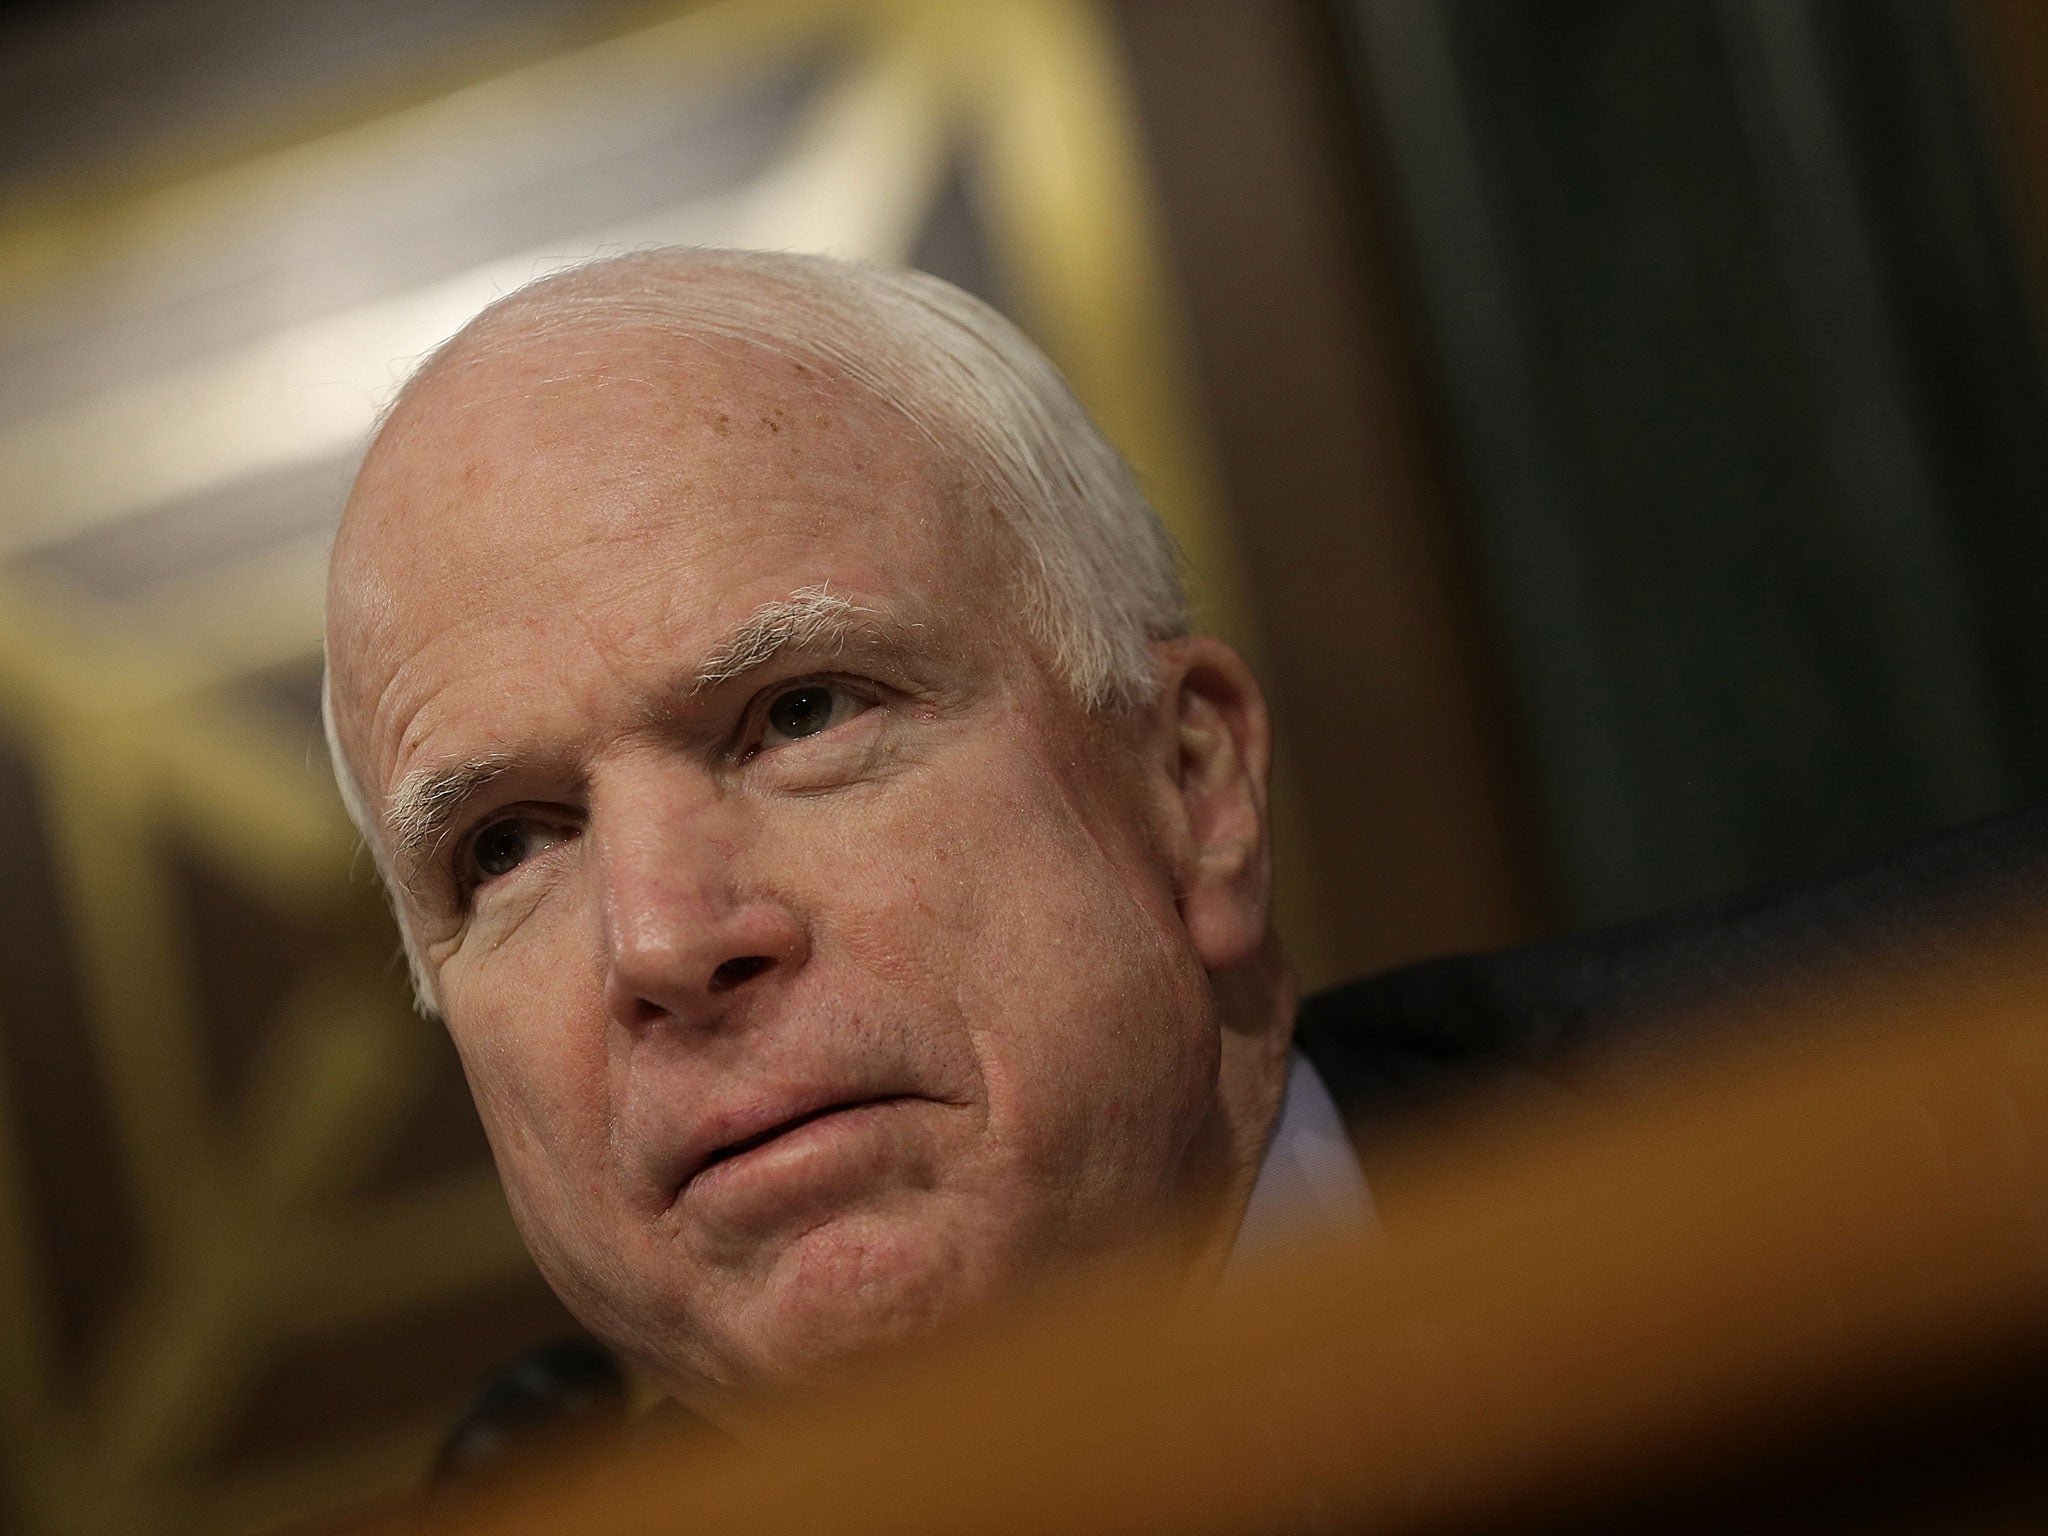 Senator John McCain has been an outspoken critic of Barack Obama